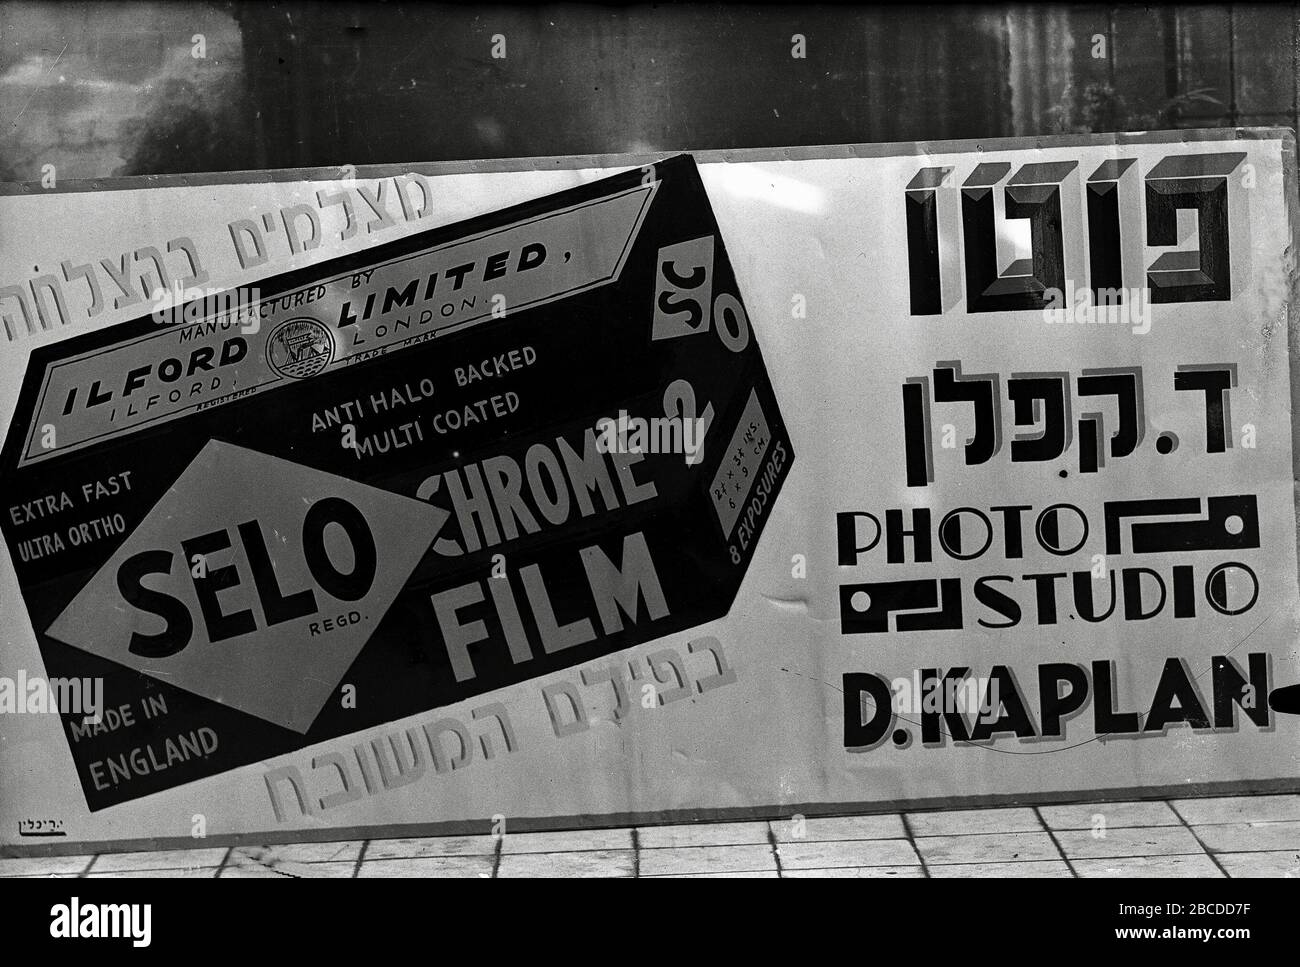 English Danial Kaplan S Photo Studio Sign Kfar Saba C U O O I O I I O I U O U I U C U I U U I O E U Ss U U E O E E 1 January 1941 This Is Available From National Photo